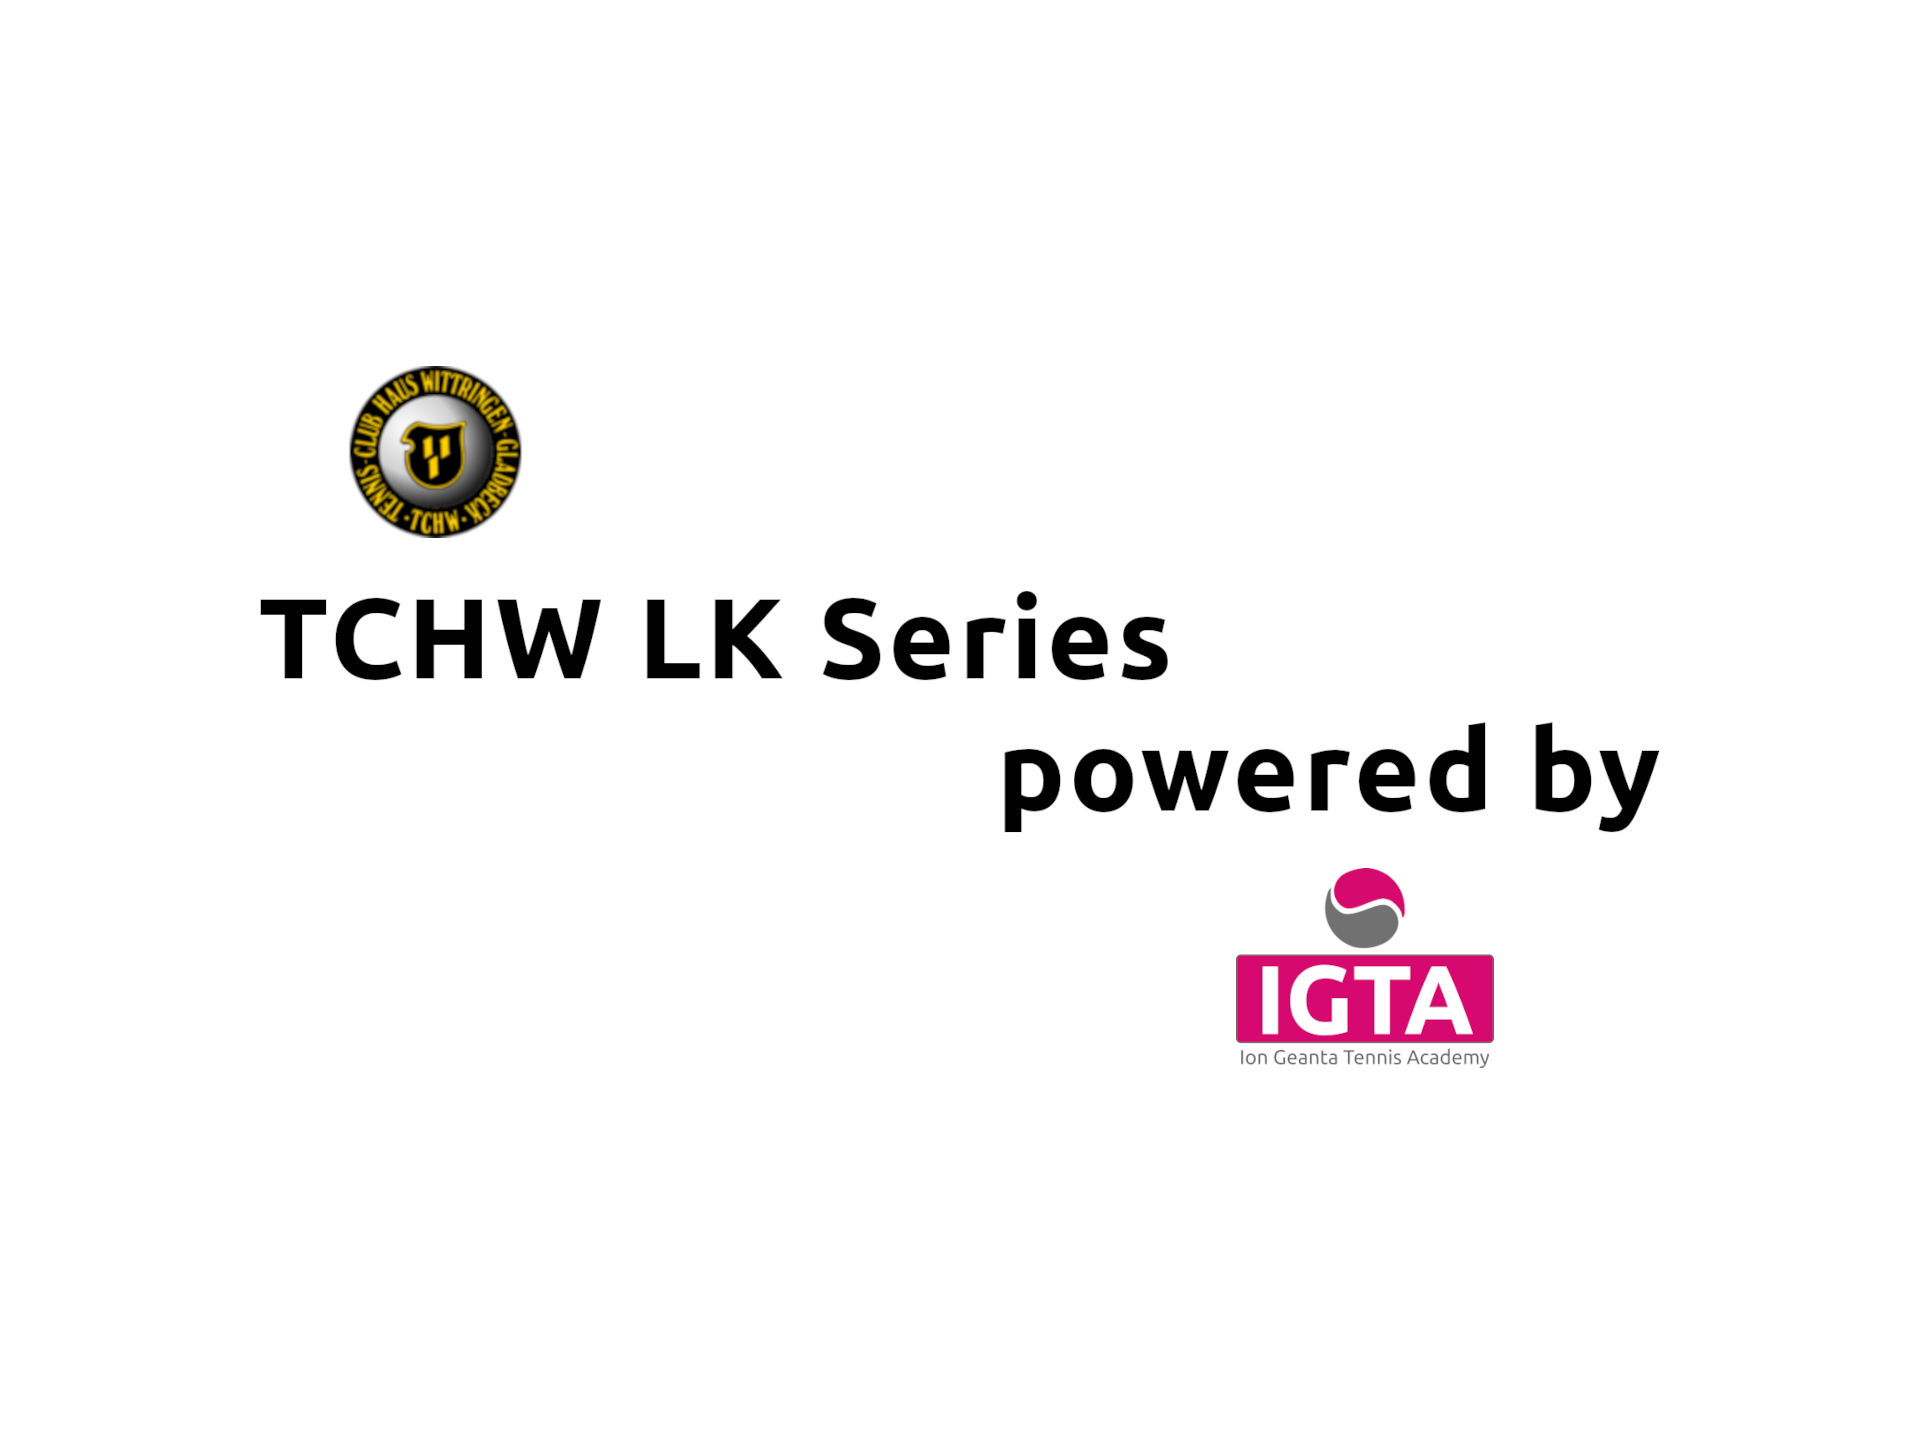 TCHW LK-Series